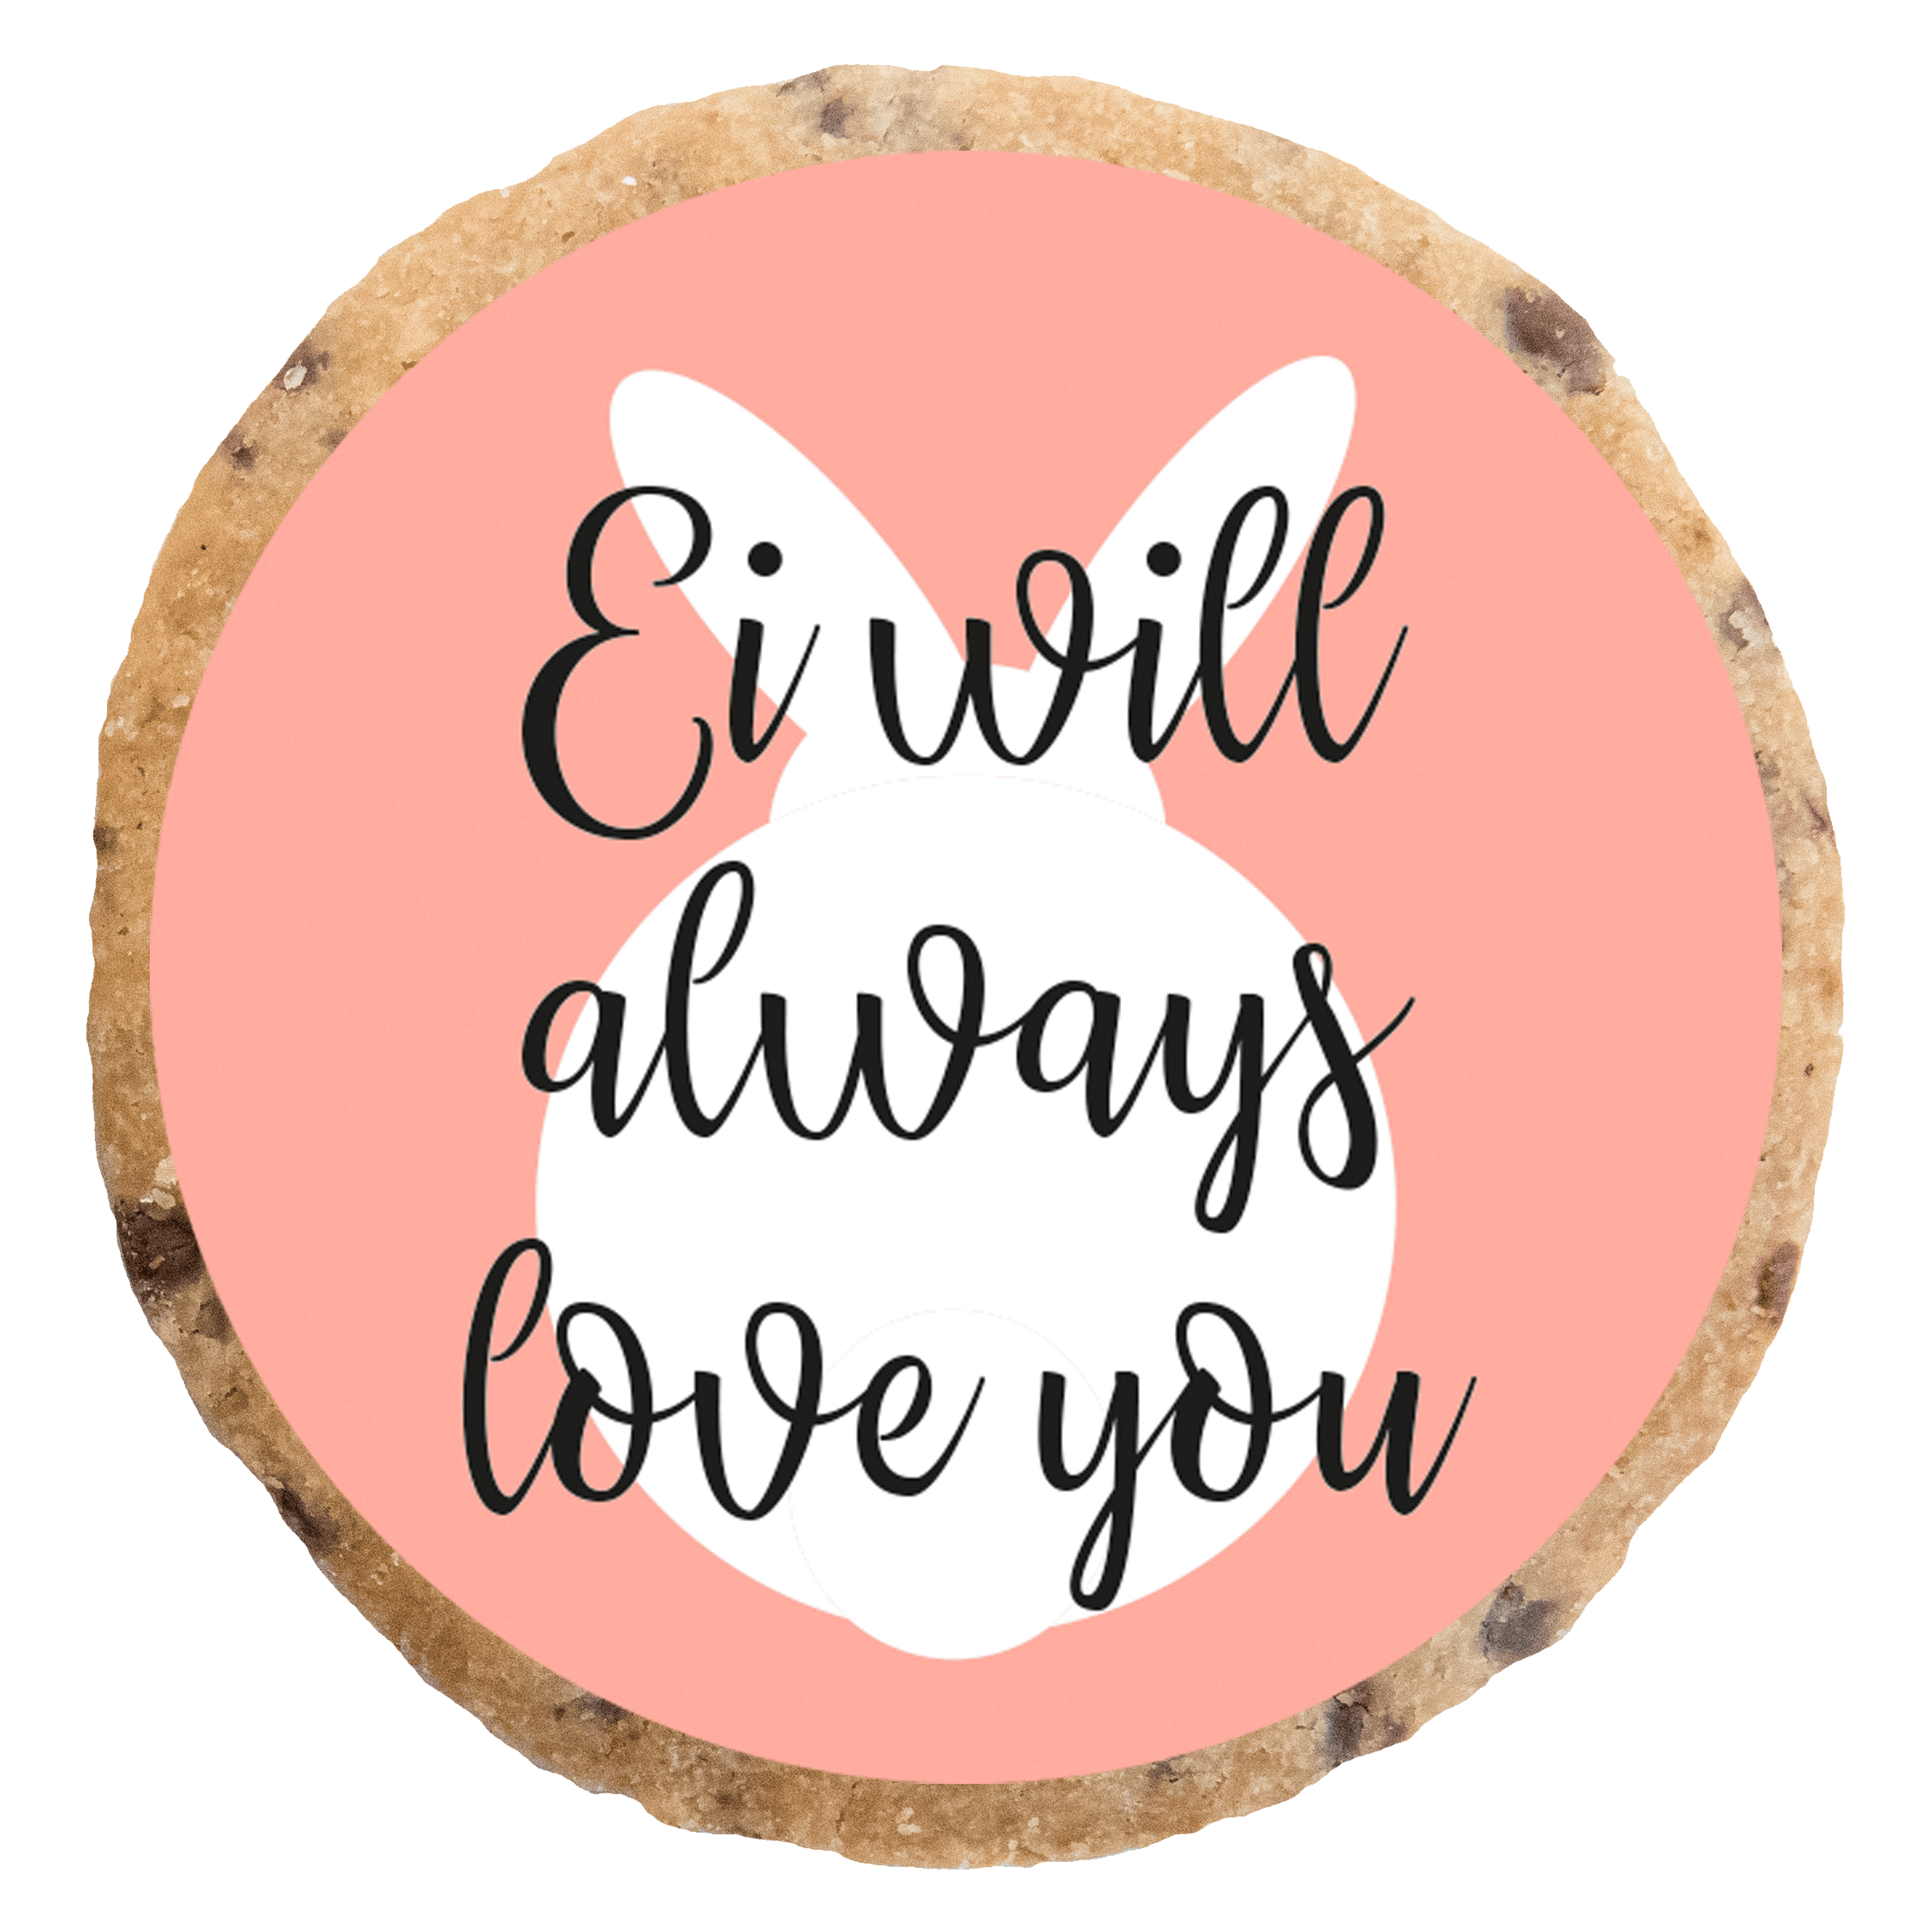 "Ei will always love you" MotivKEKS